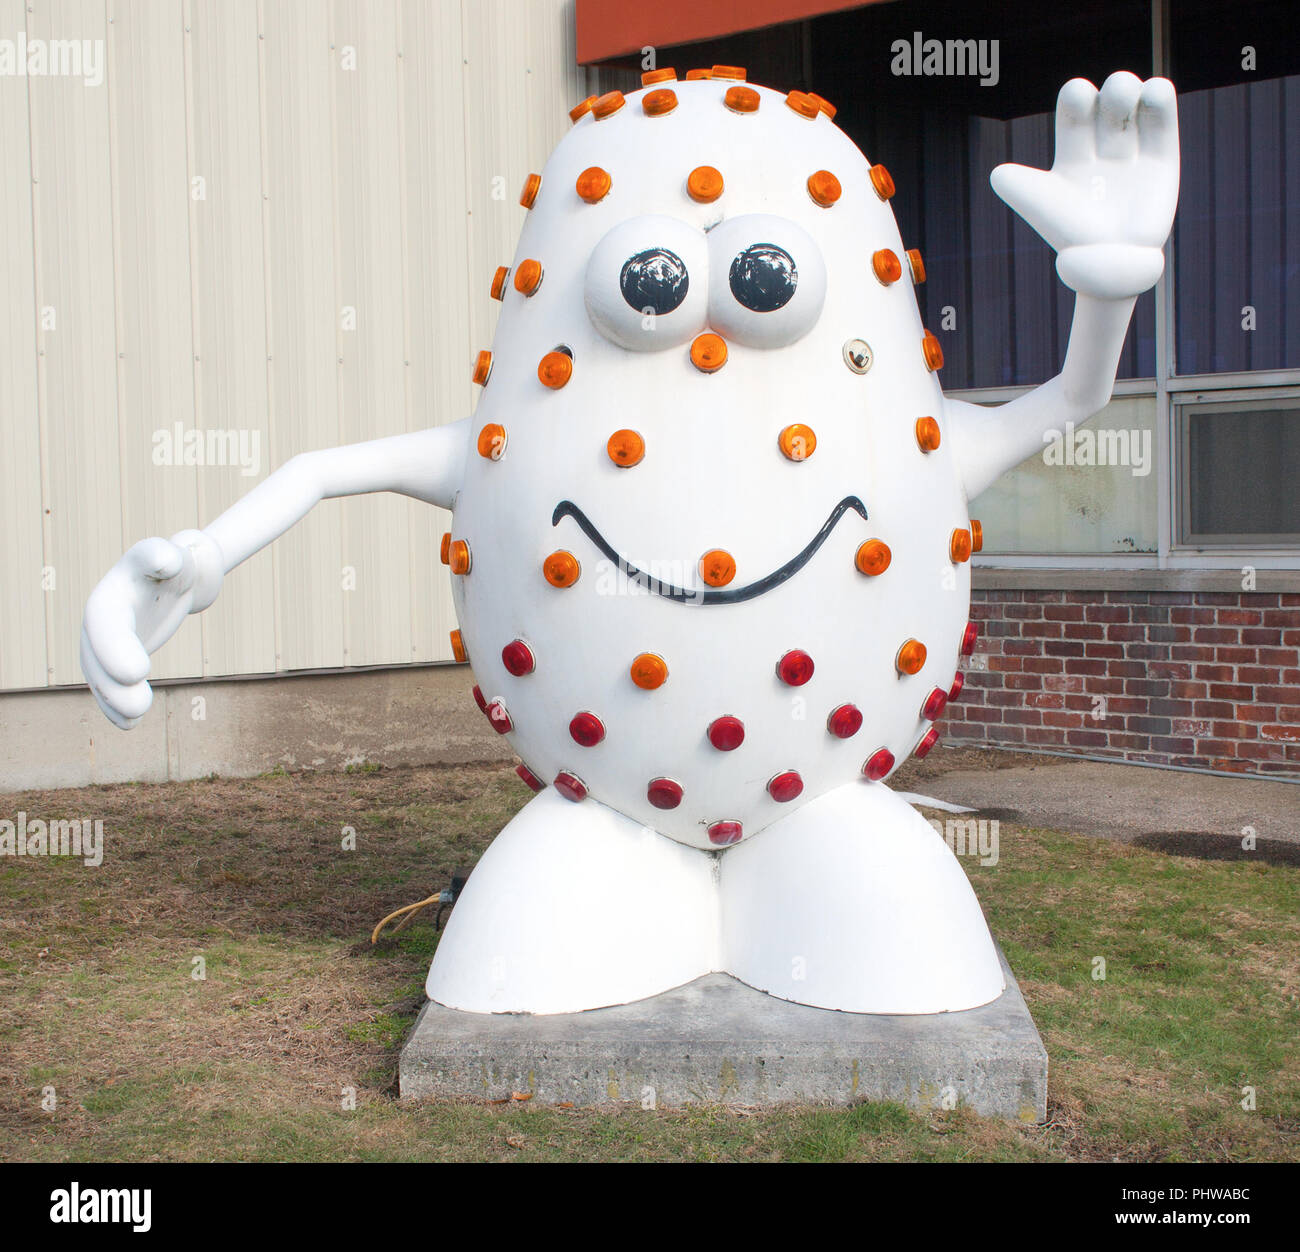 Mr Potato Head with polka dots sculpture in Warwick Rhode Island Stock Photo